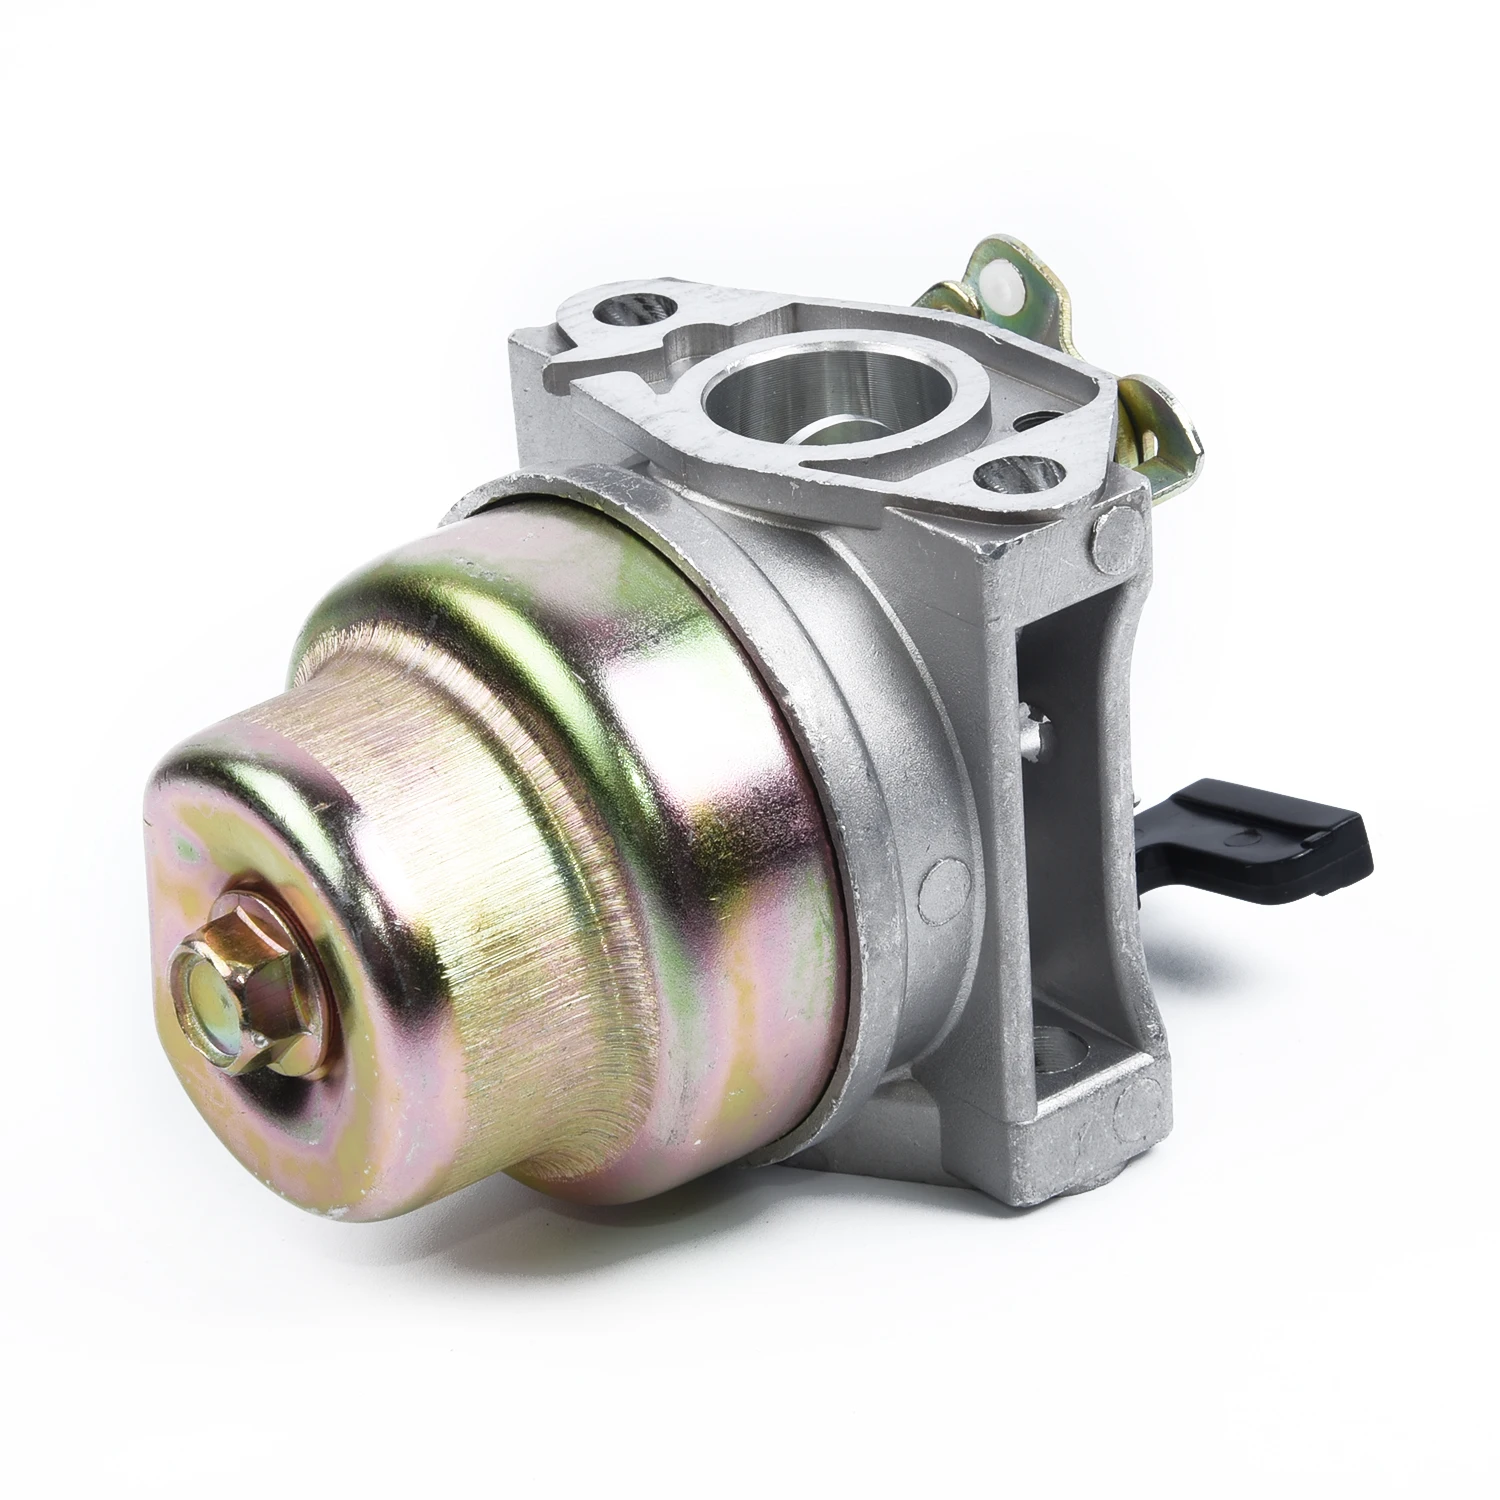 Donkivvy Kit de carburador para motores Honda G150 G200 Reemplazar motores 16100-883-095 16100-883-105